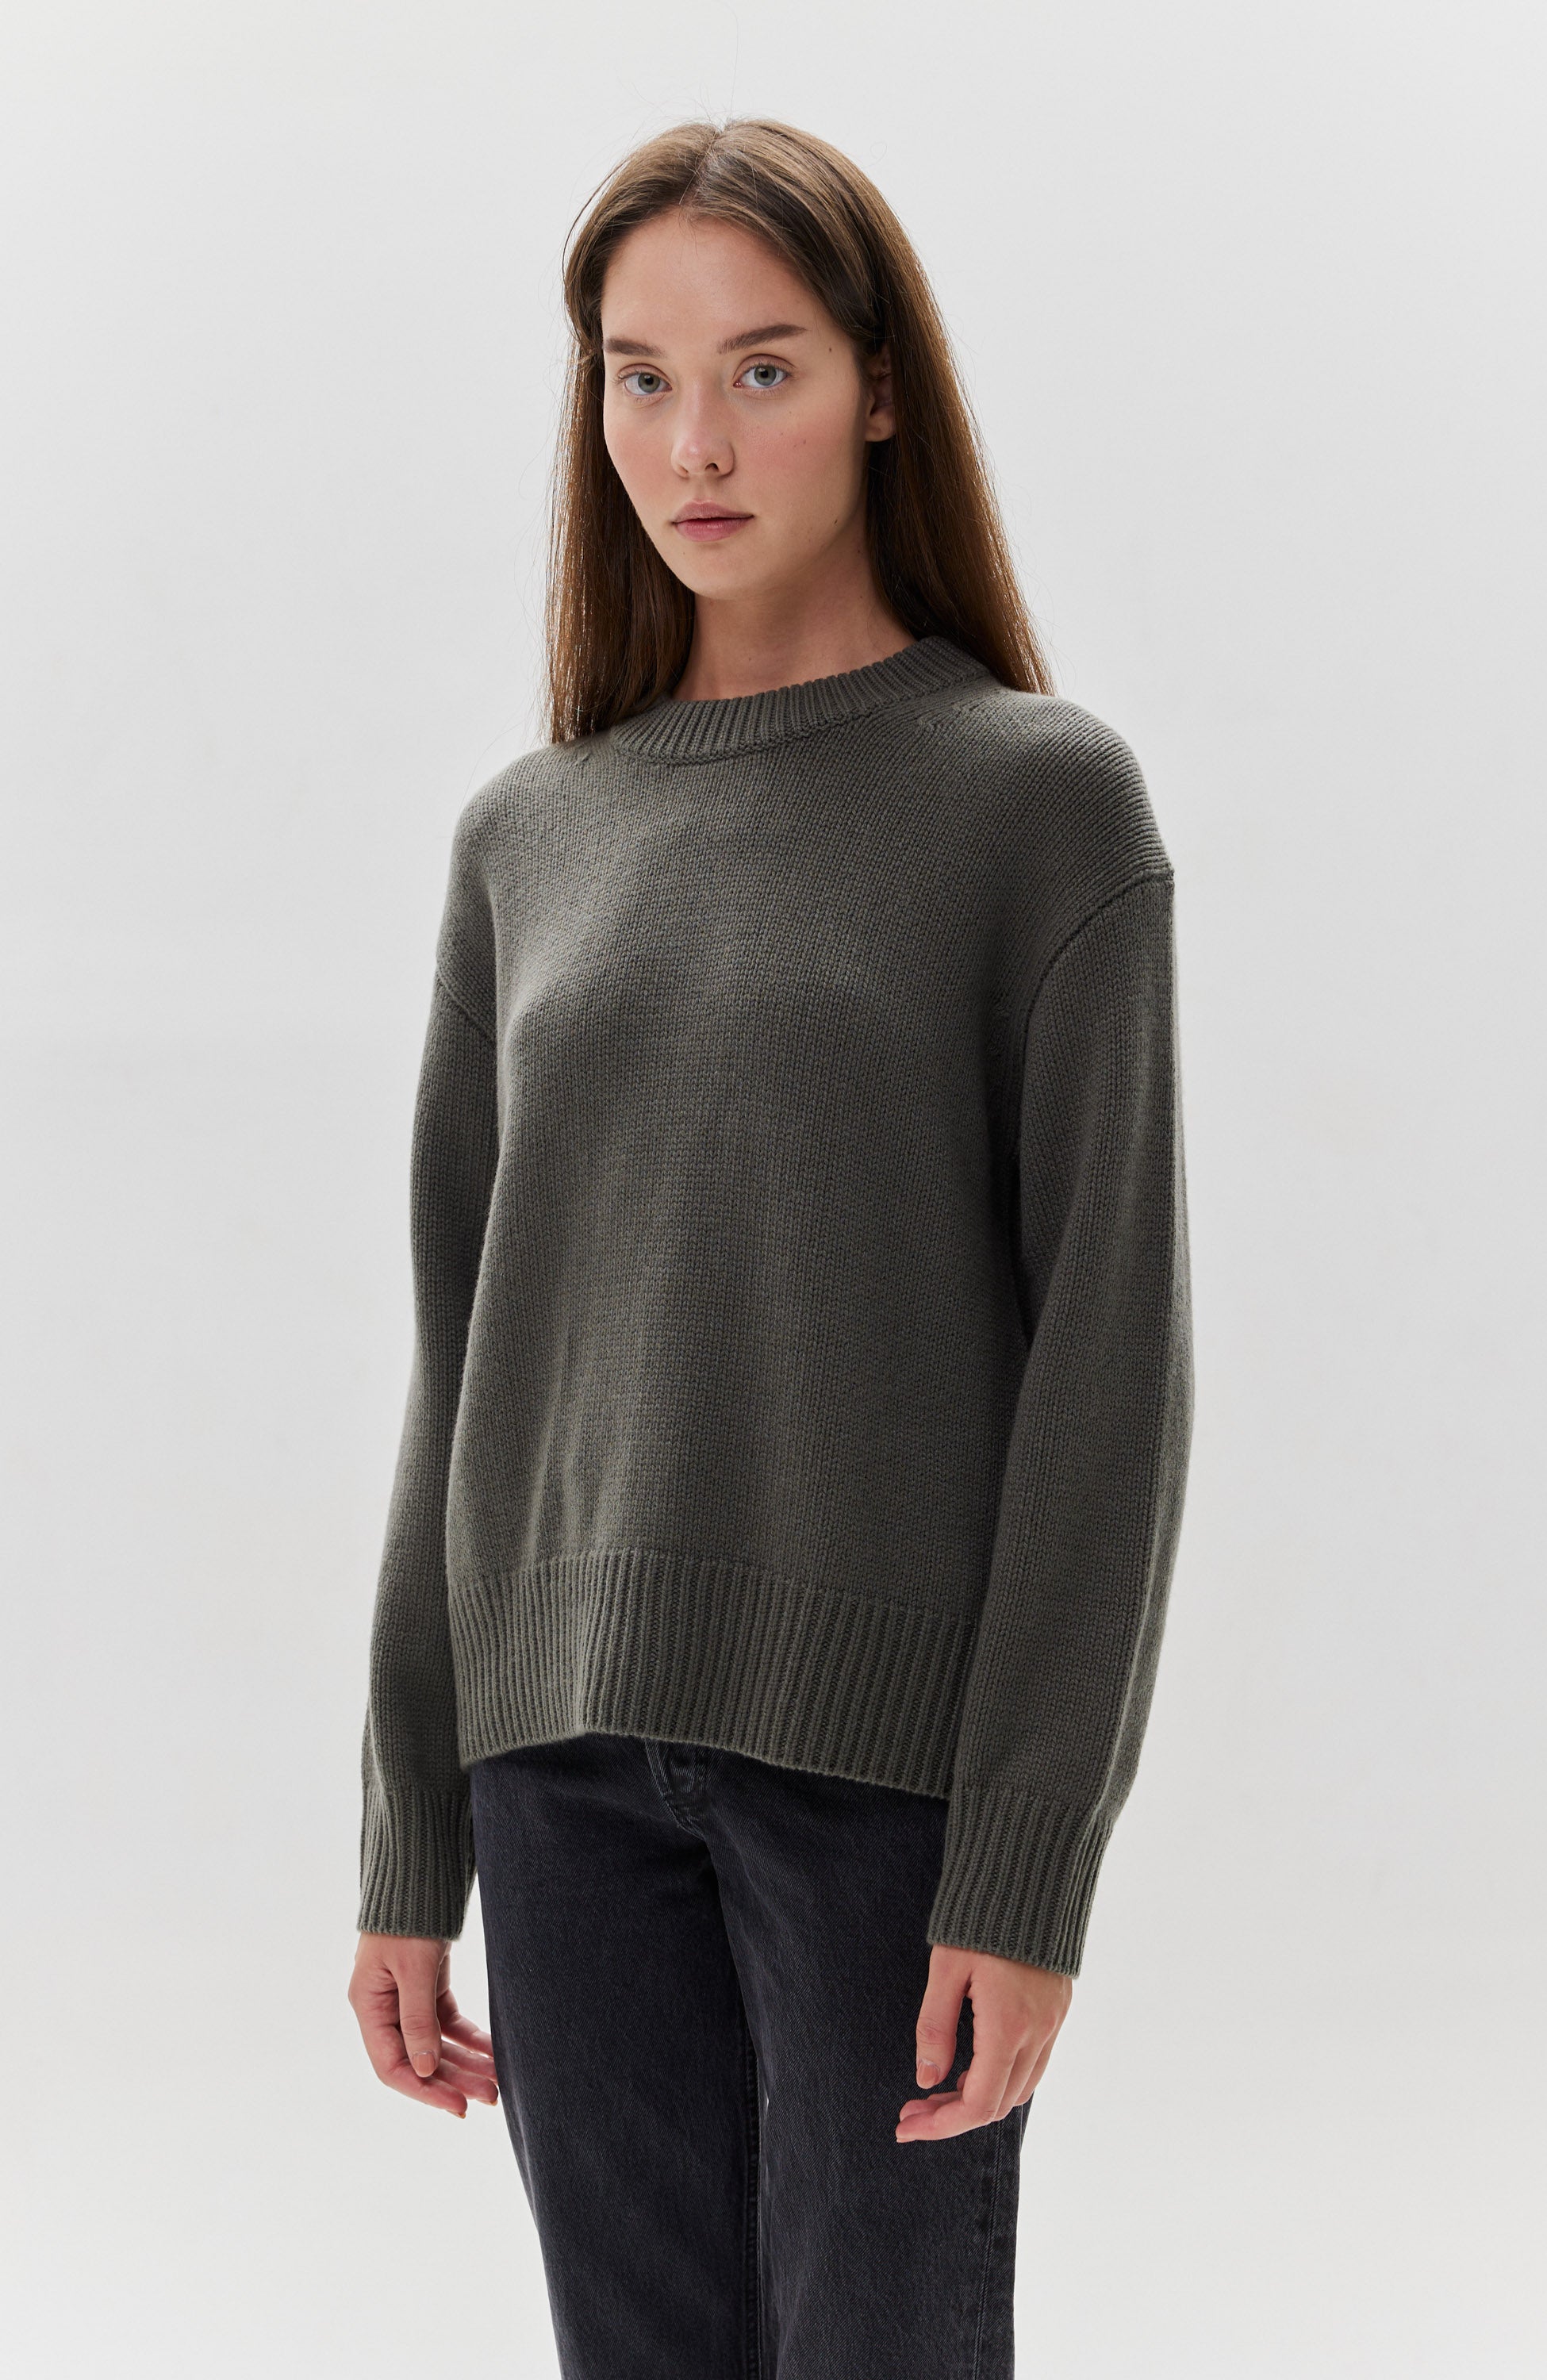 Single-sleeve cashmere top FORREST By LISA YANG - Shop Online at BEIGE BROWN